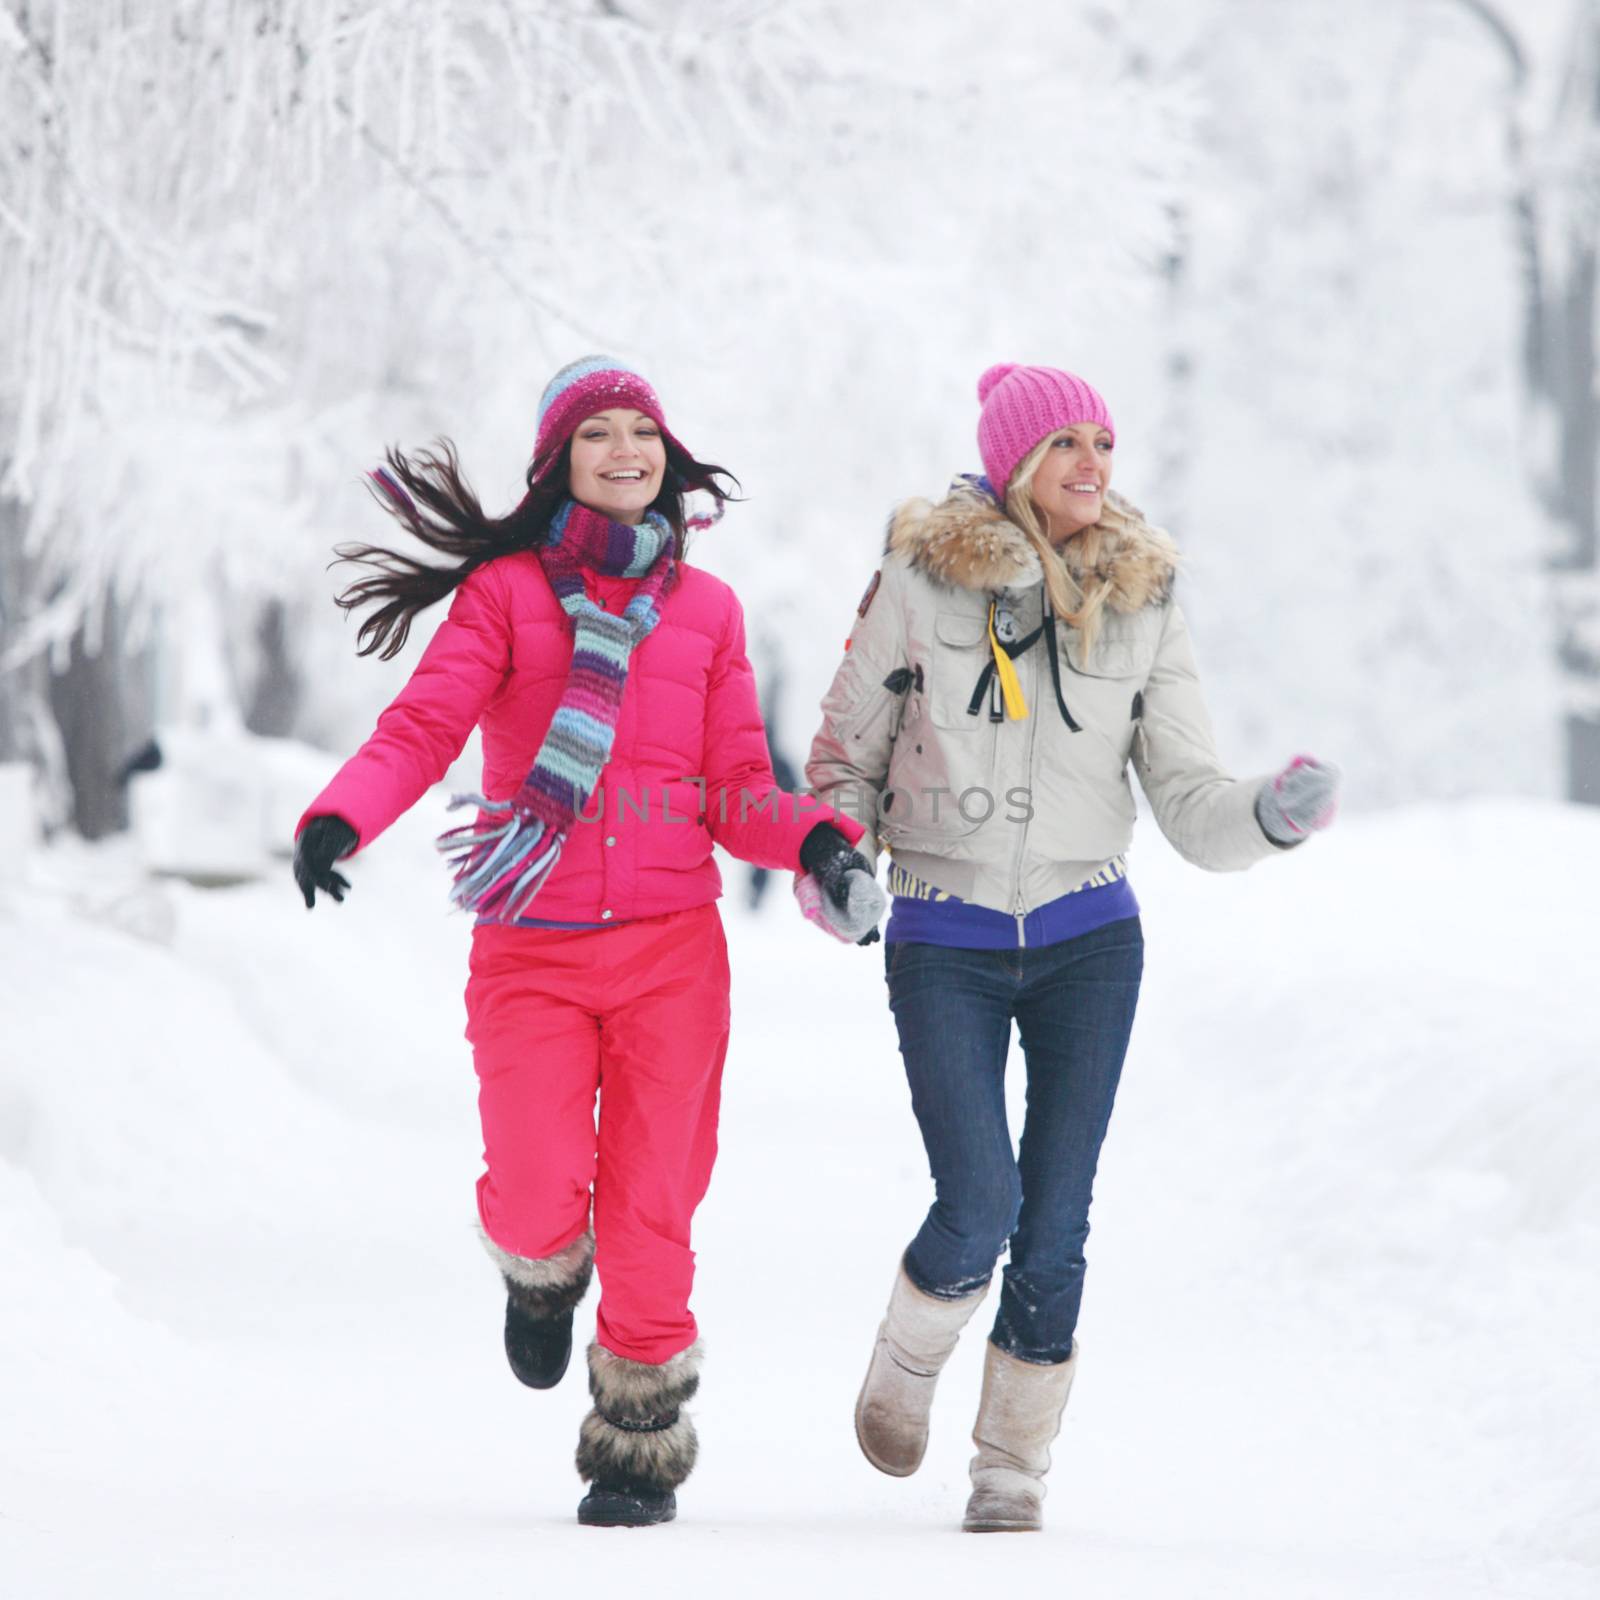 Two women running in winter park by Yellowj